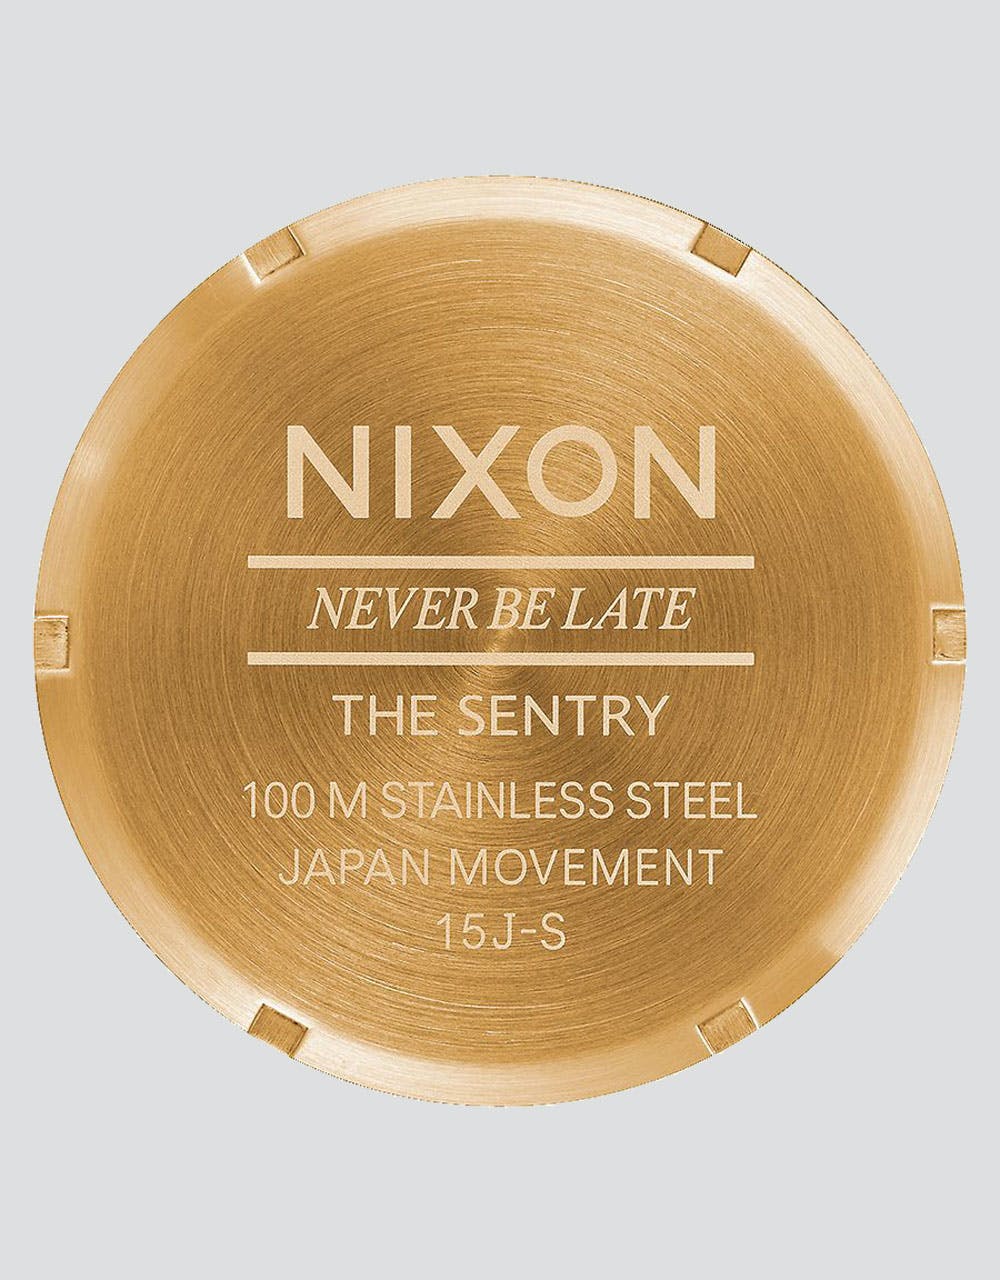 Nixon Sentry Leather Watch - Gold/Black